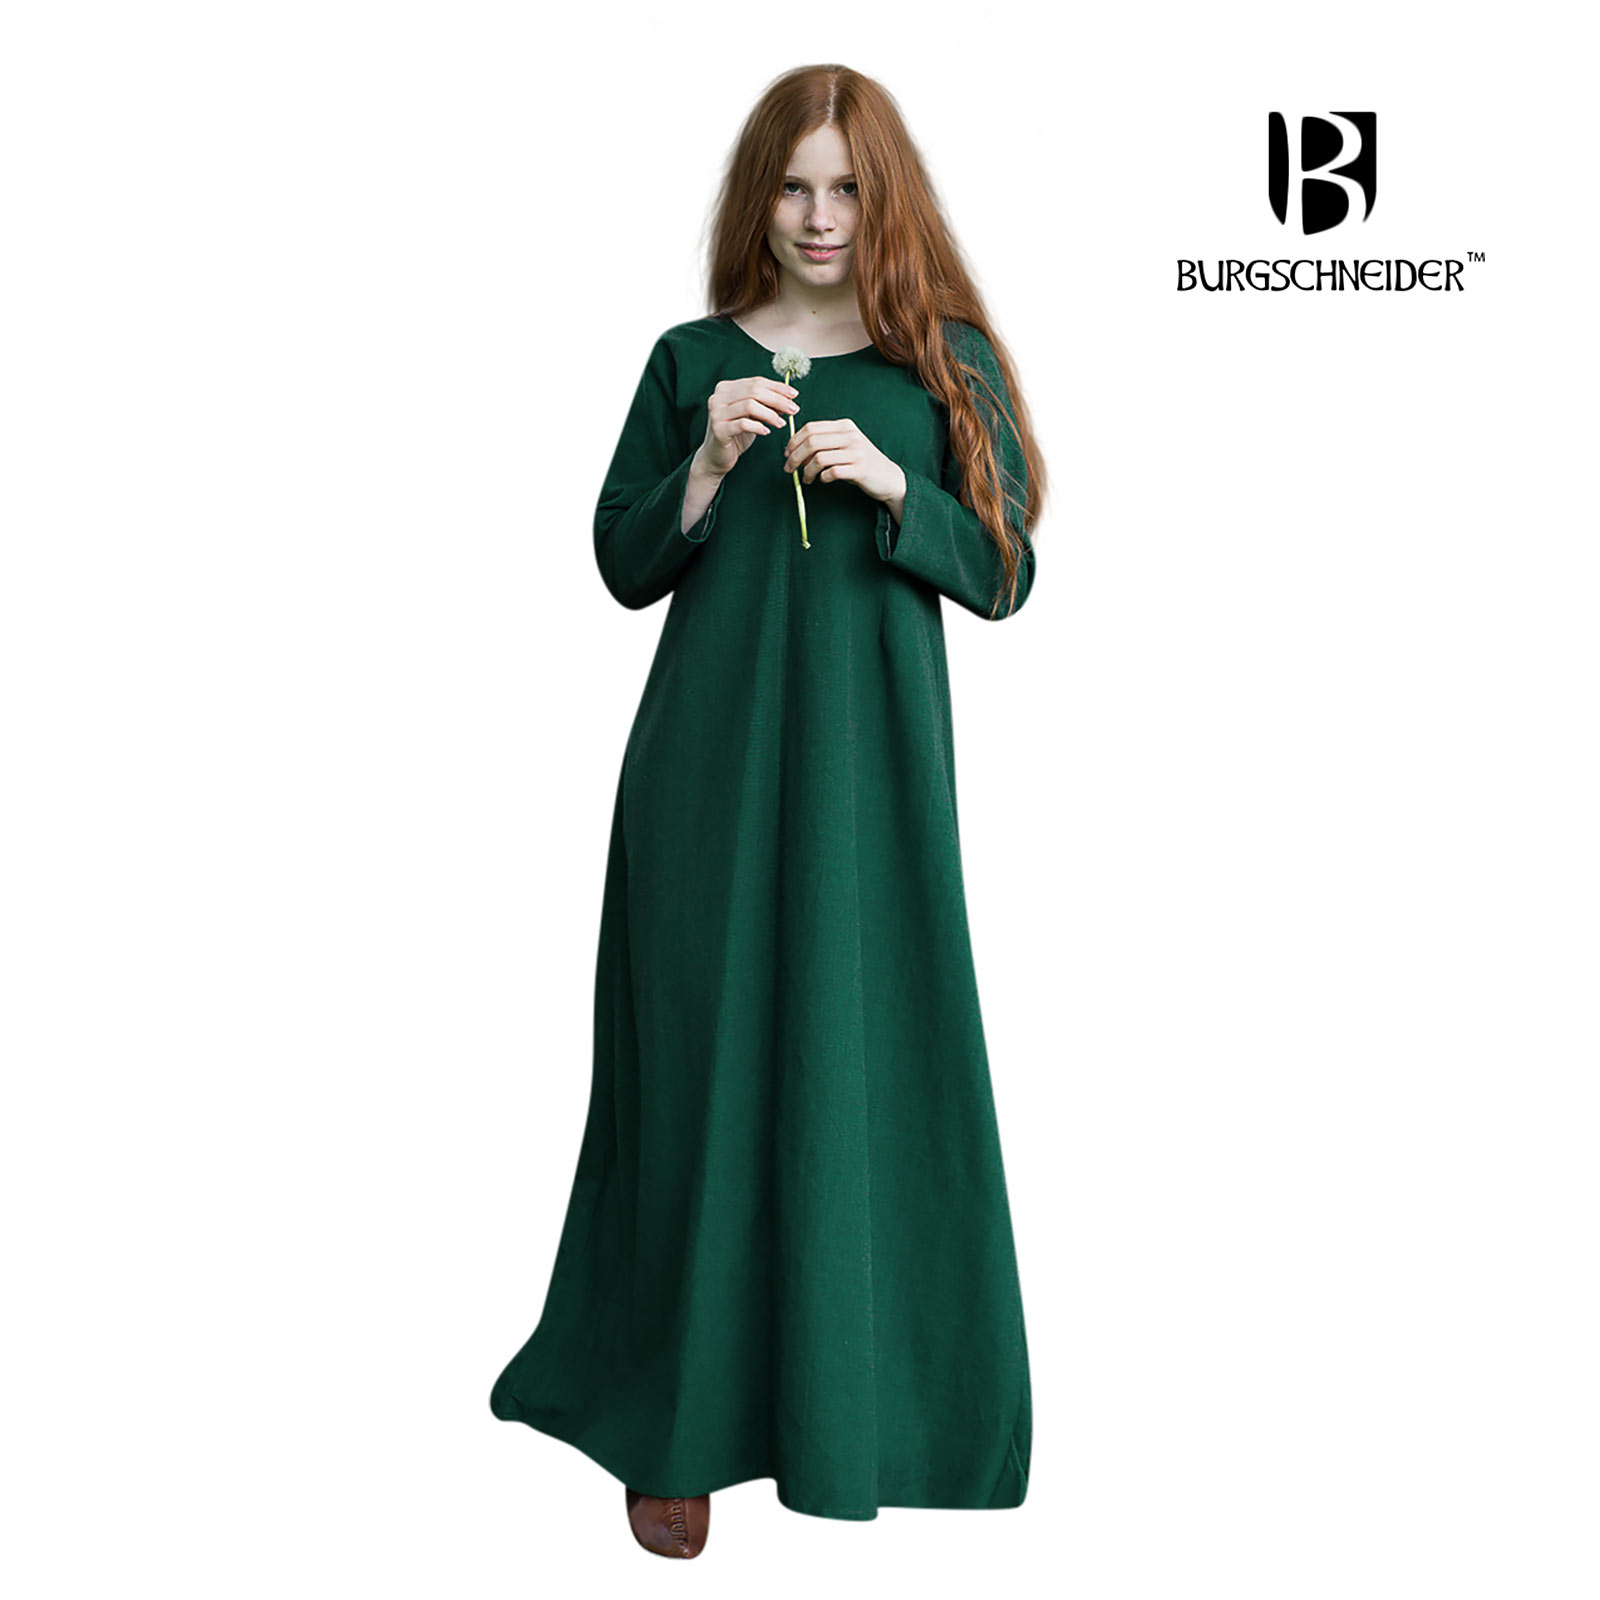 Mittelalter Unterkleid Freya grün